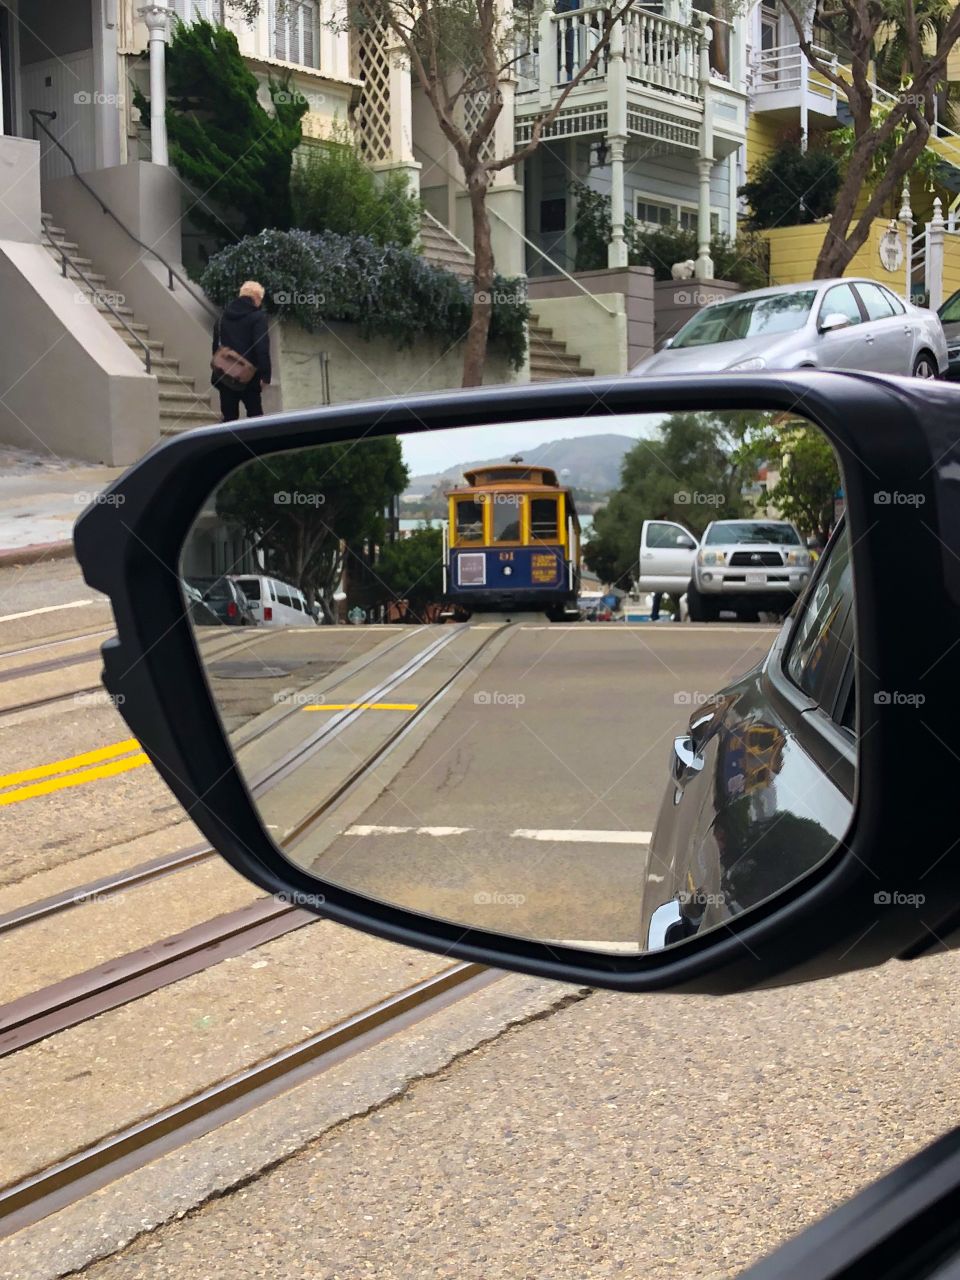 San Francisco Cable Car 